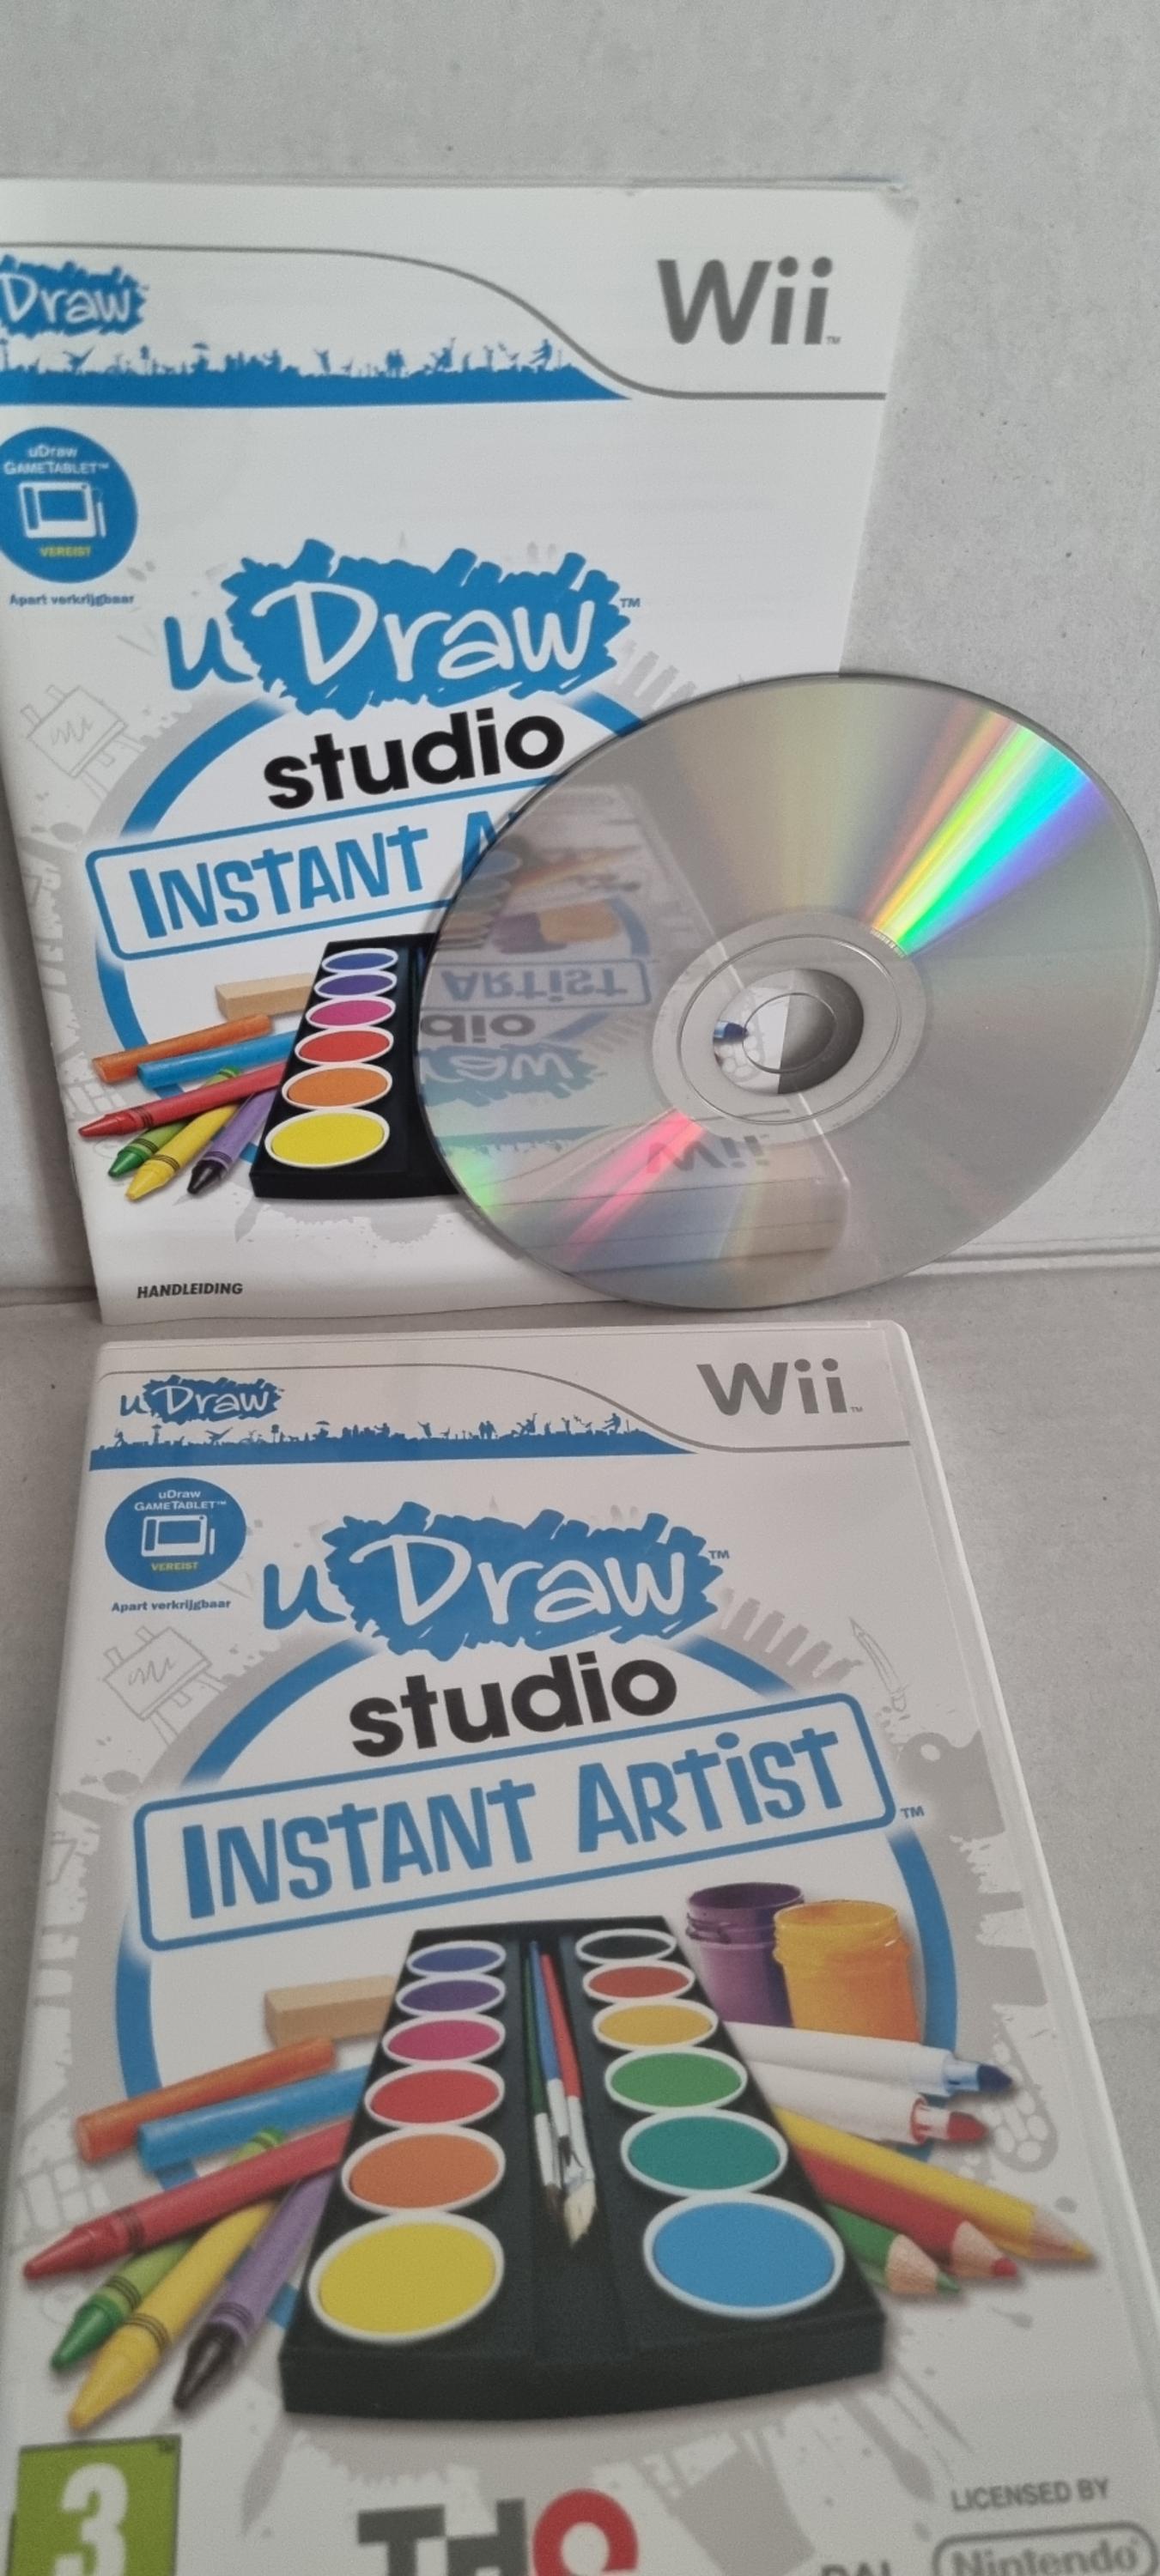 U draw Instant Artist Nintendo Wii